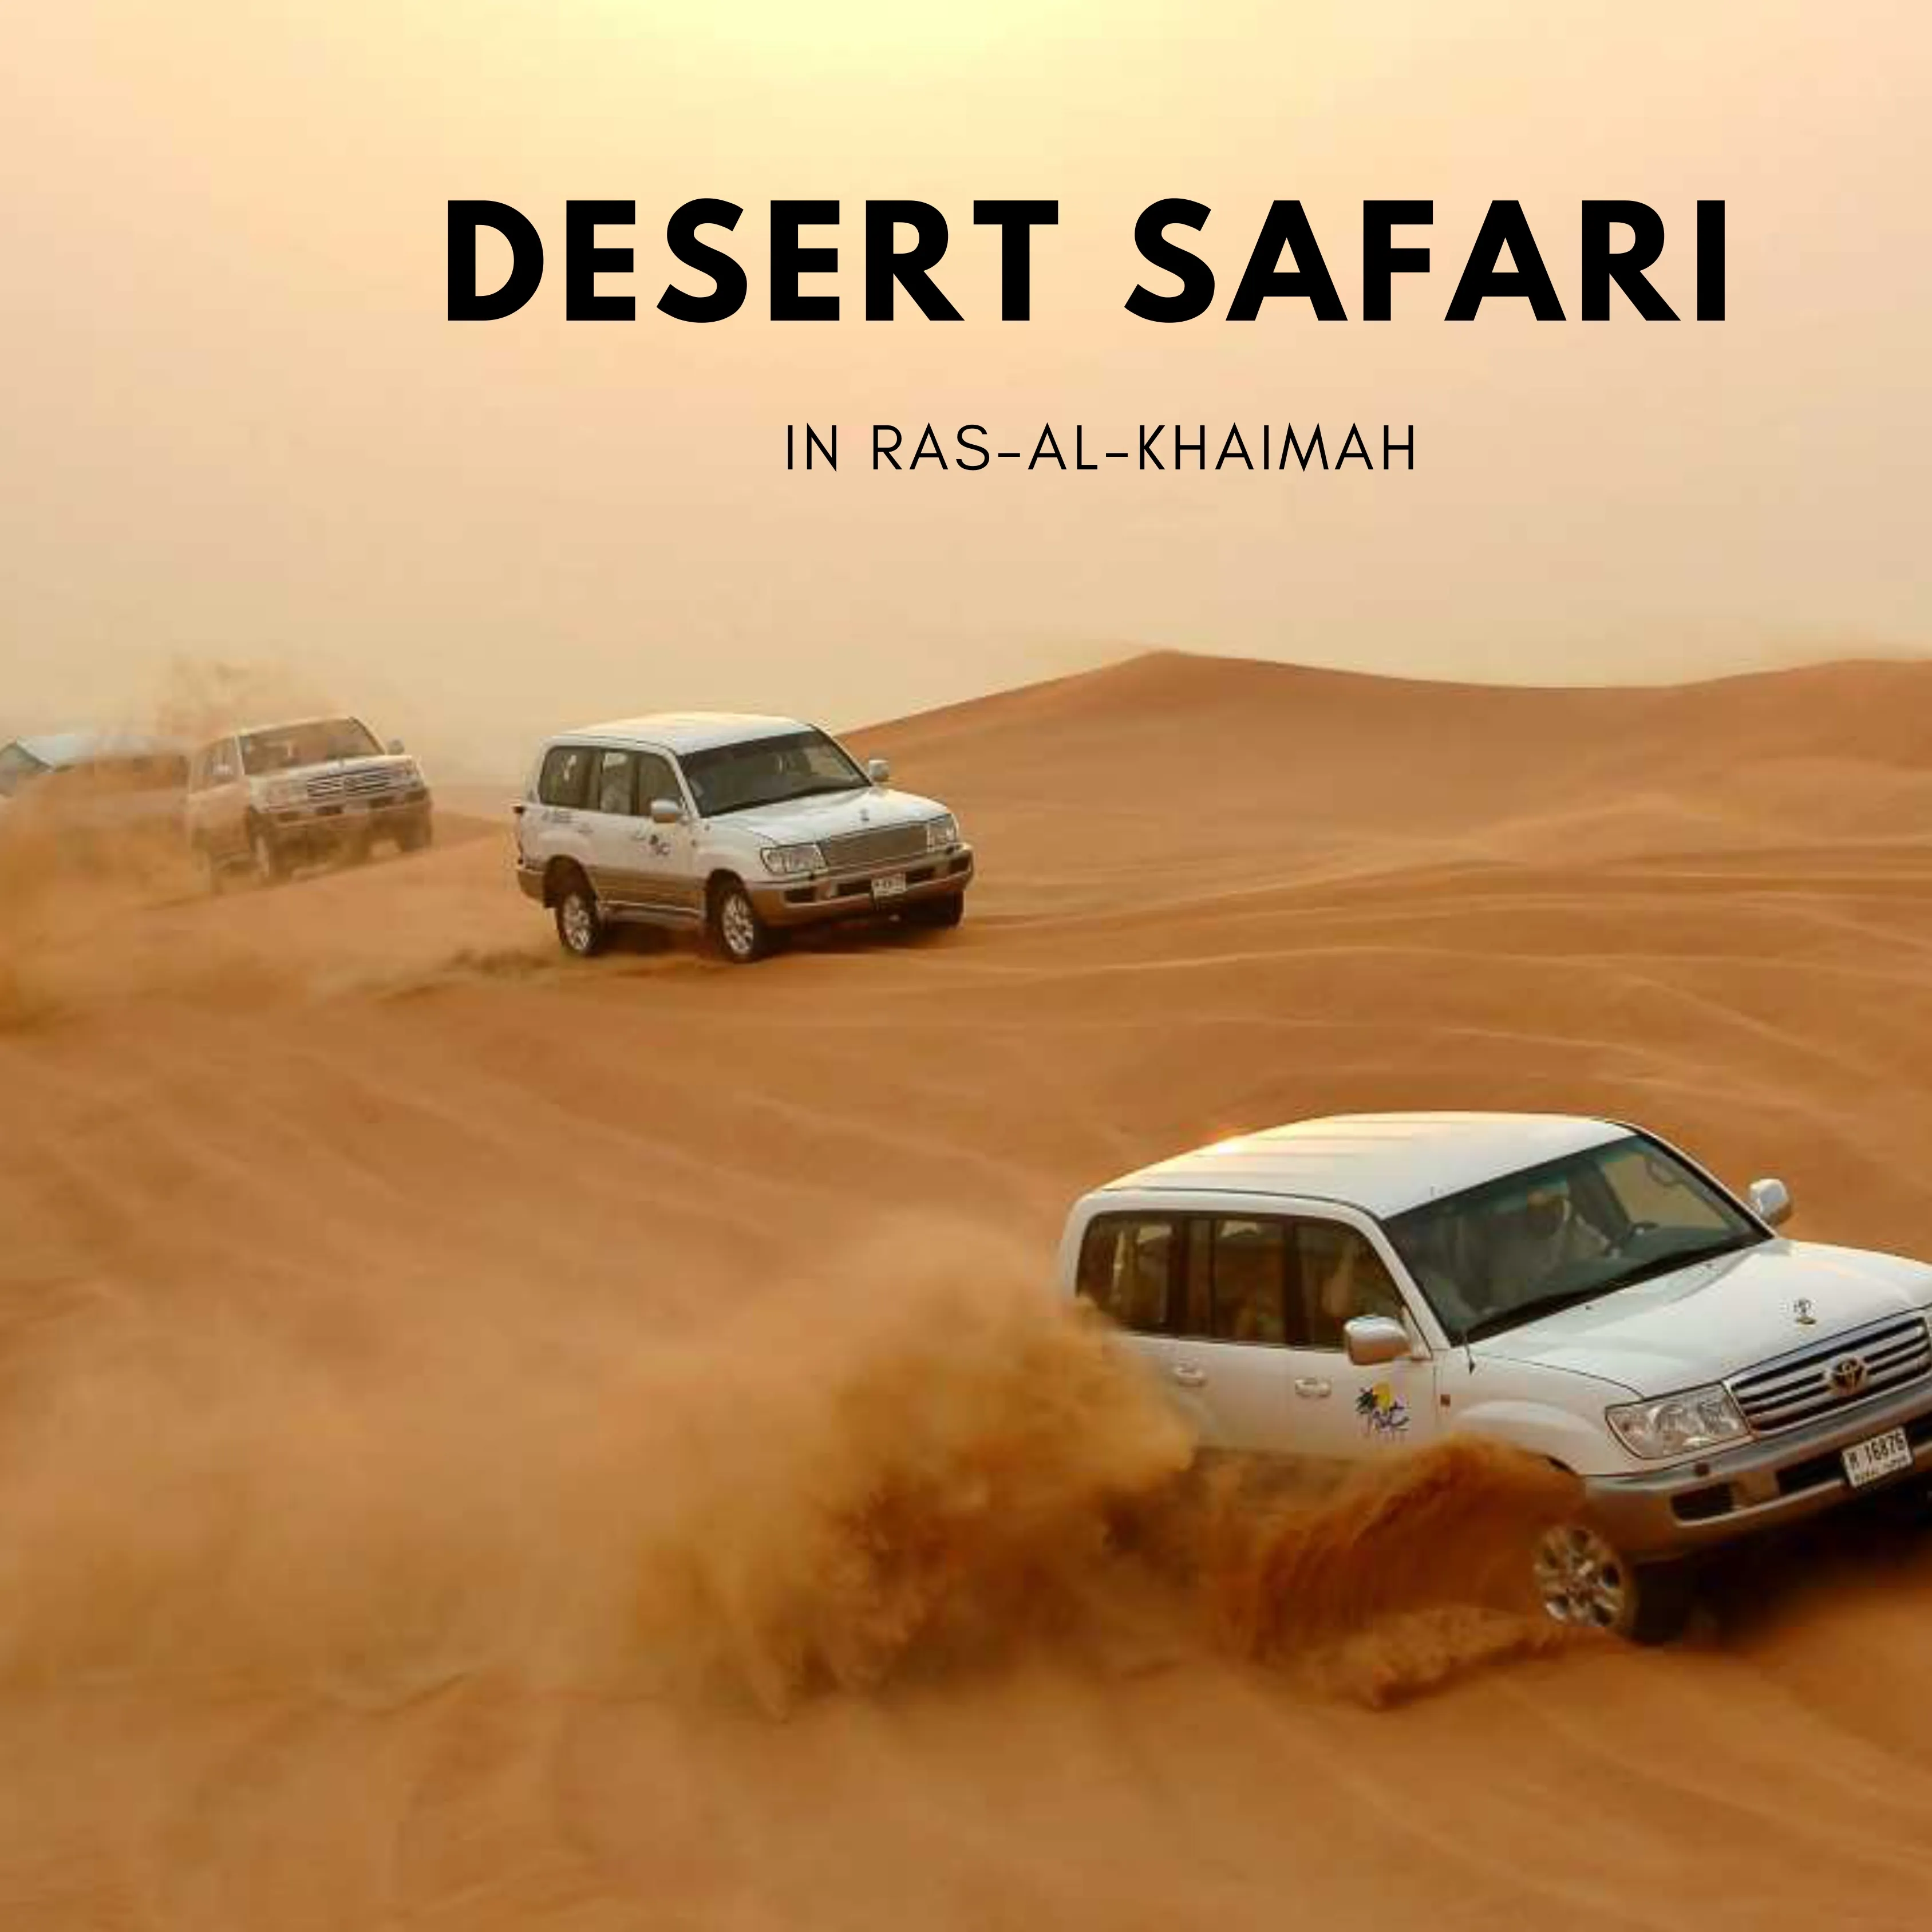 DESERT SAFARI IN RAS AL KHAIMAH